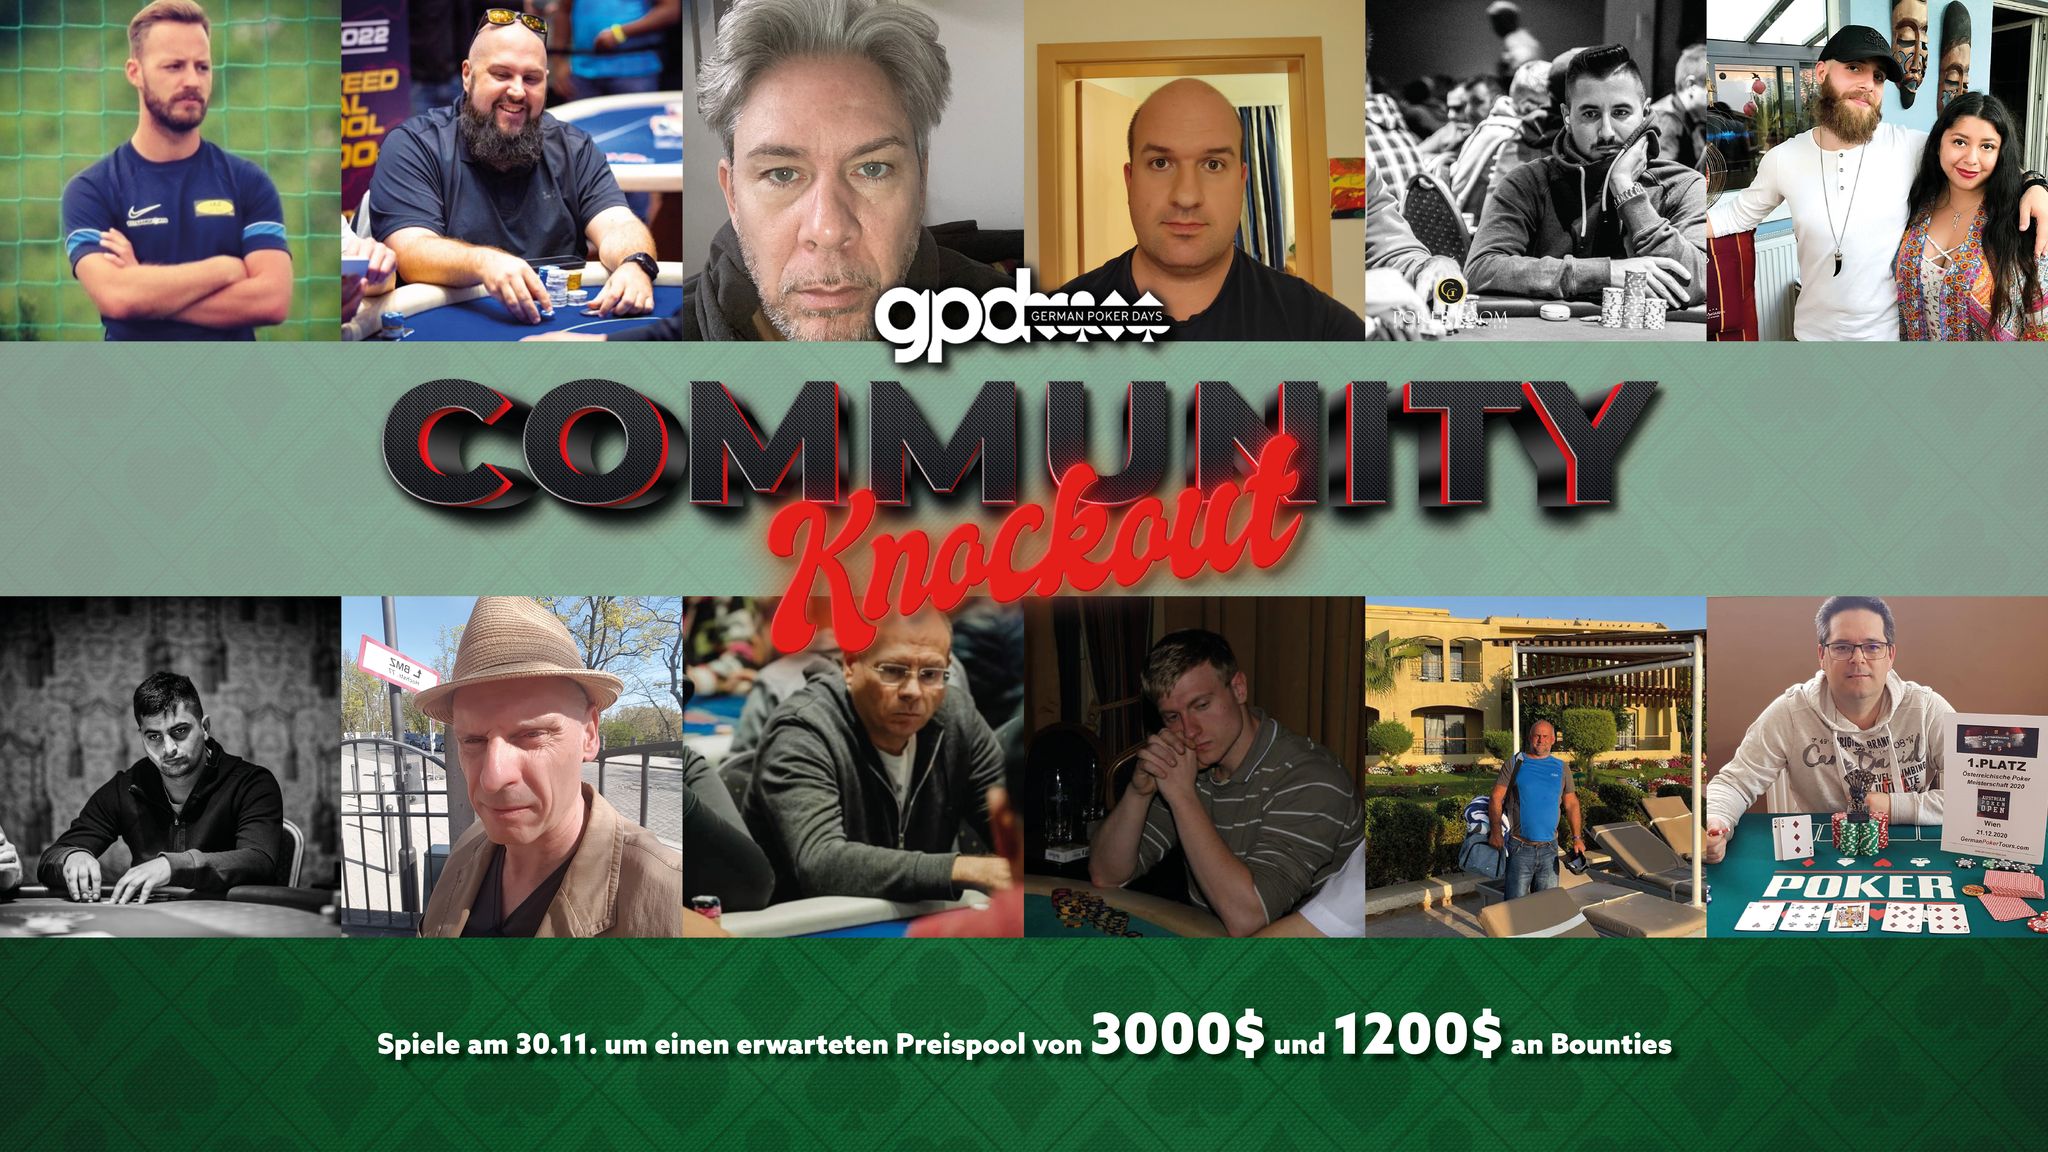 Community Knockout Special 1200$ an Bounties – ca. 3000$ erwarteter Preispool